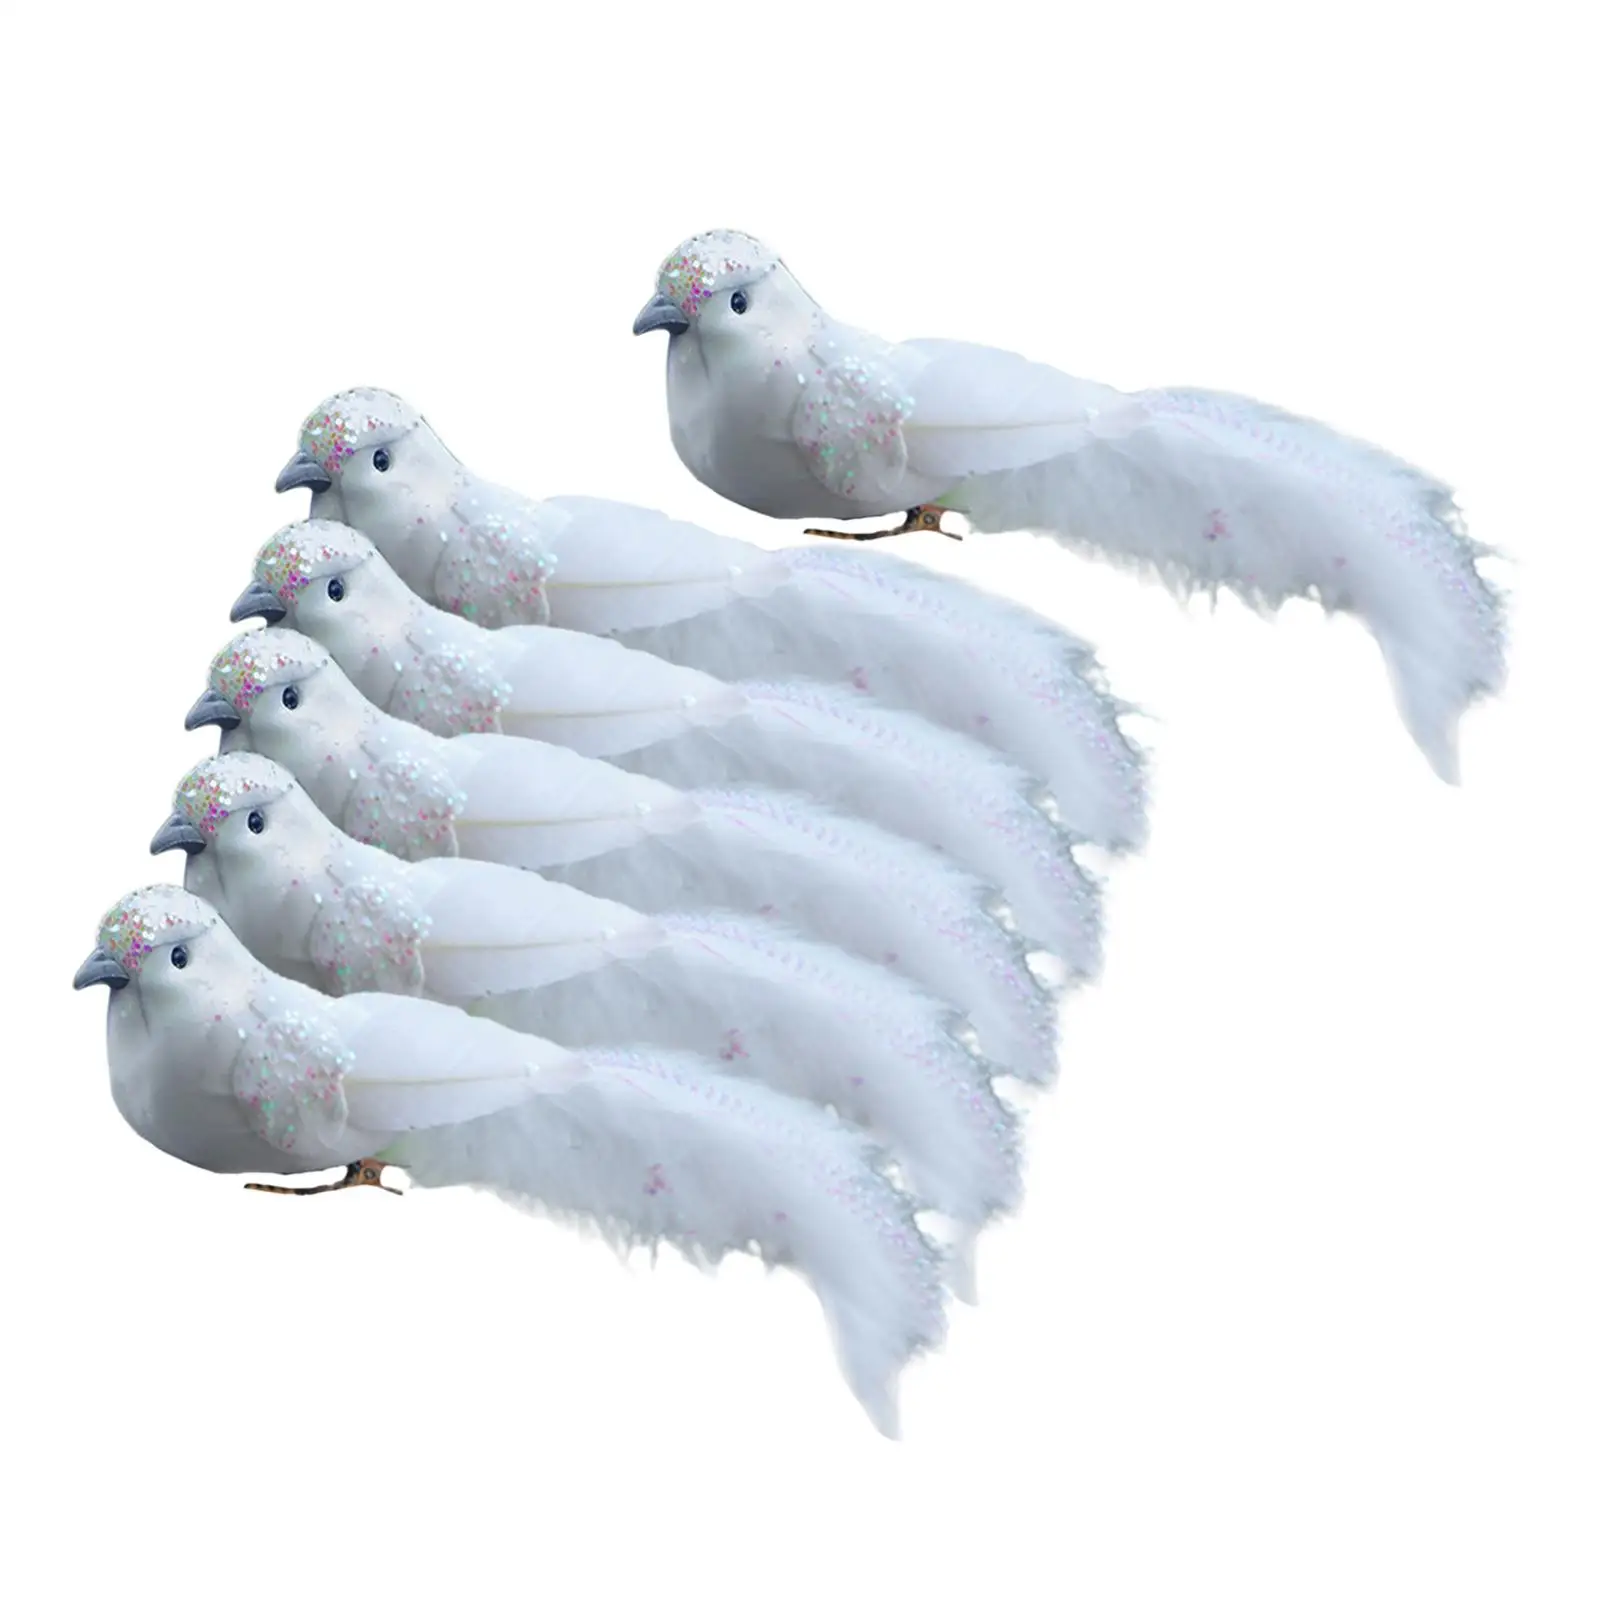 6 Pieces Artificial Feather Birds Simulation Garden Figurine Realistic Bird Model Crafts for Fairy Garden Window Home Ornaments